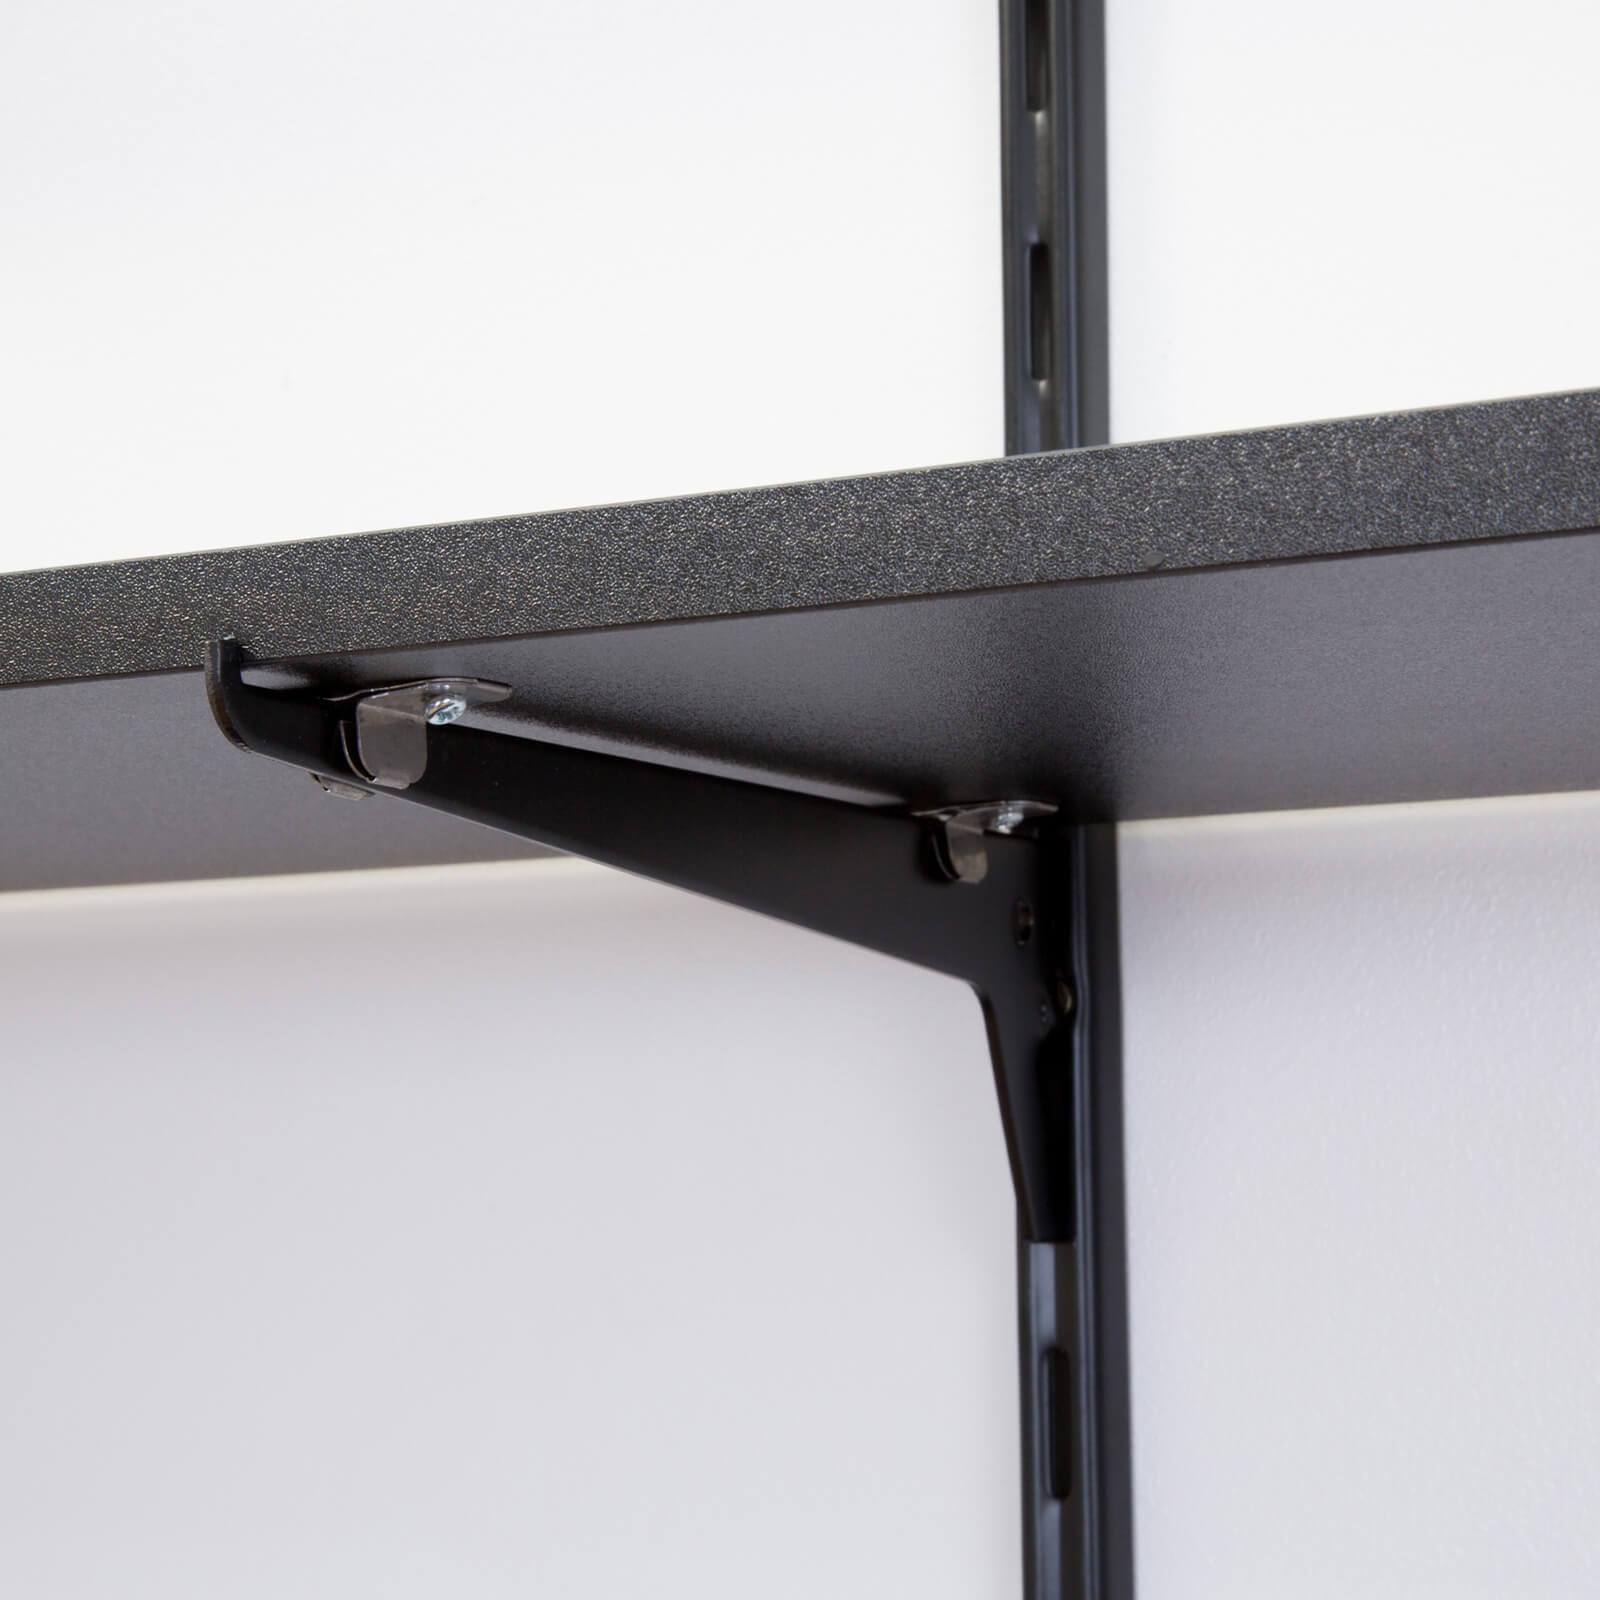 Single Slot Upright Wall Strip - Black - 200cm